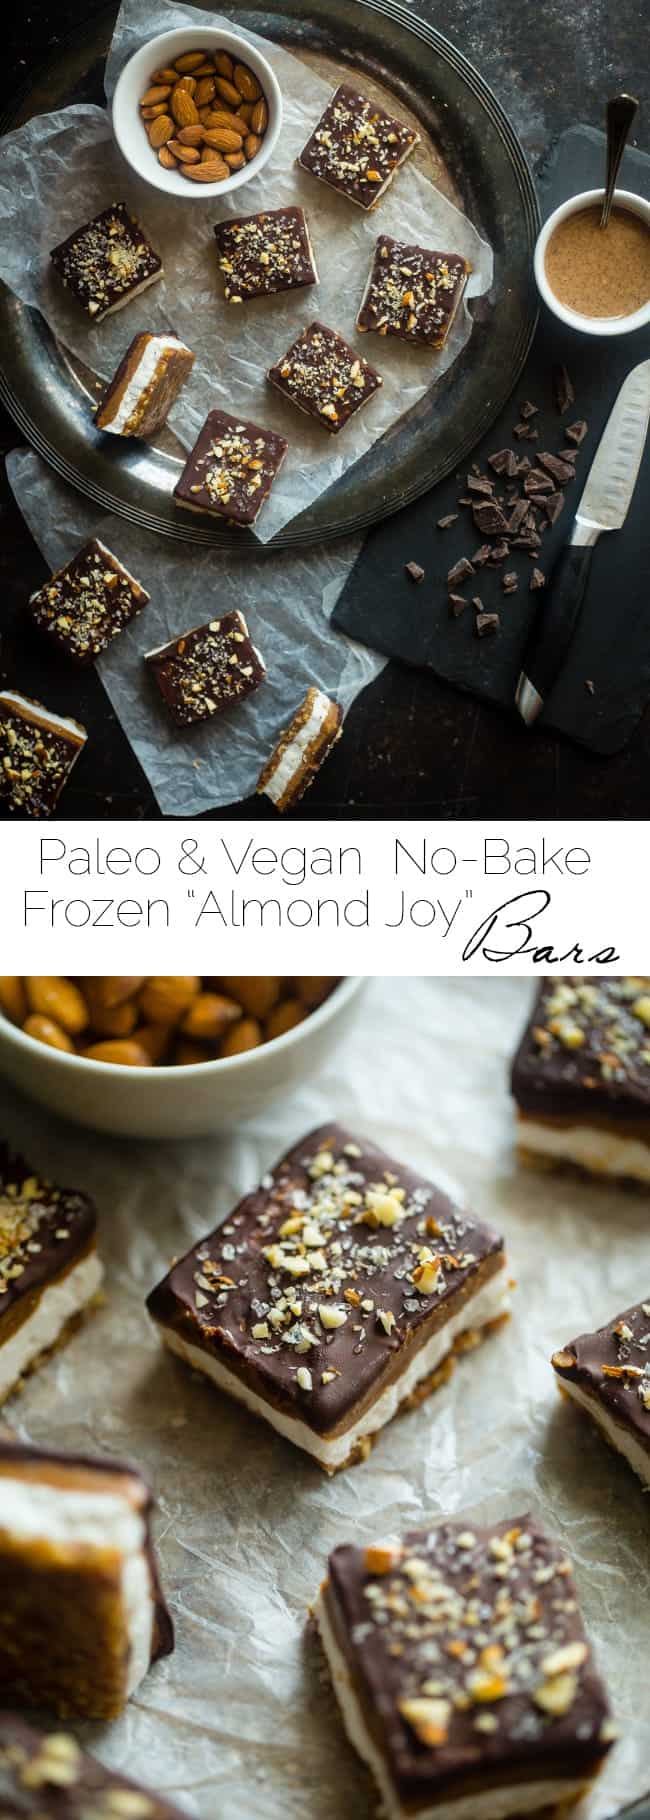 No-Bake Paleo Salted Almond Joy Bars - These salty-sweet, SUPER easy, no-bake bars taste like a frozen Almond Joy! They're the perfect healthy summer treat that's paleo and vegan friendly! | Foodfaithfitness.com | @FoodFaithFit